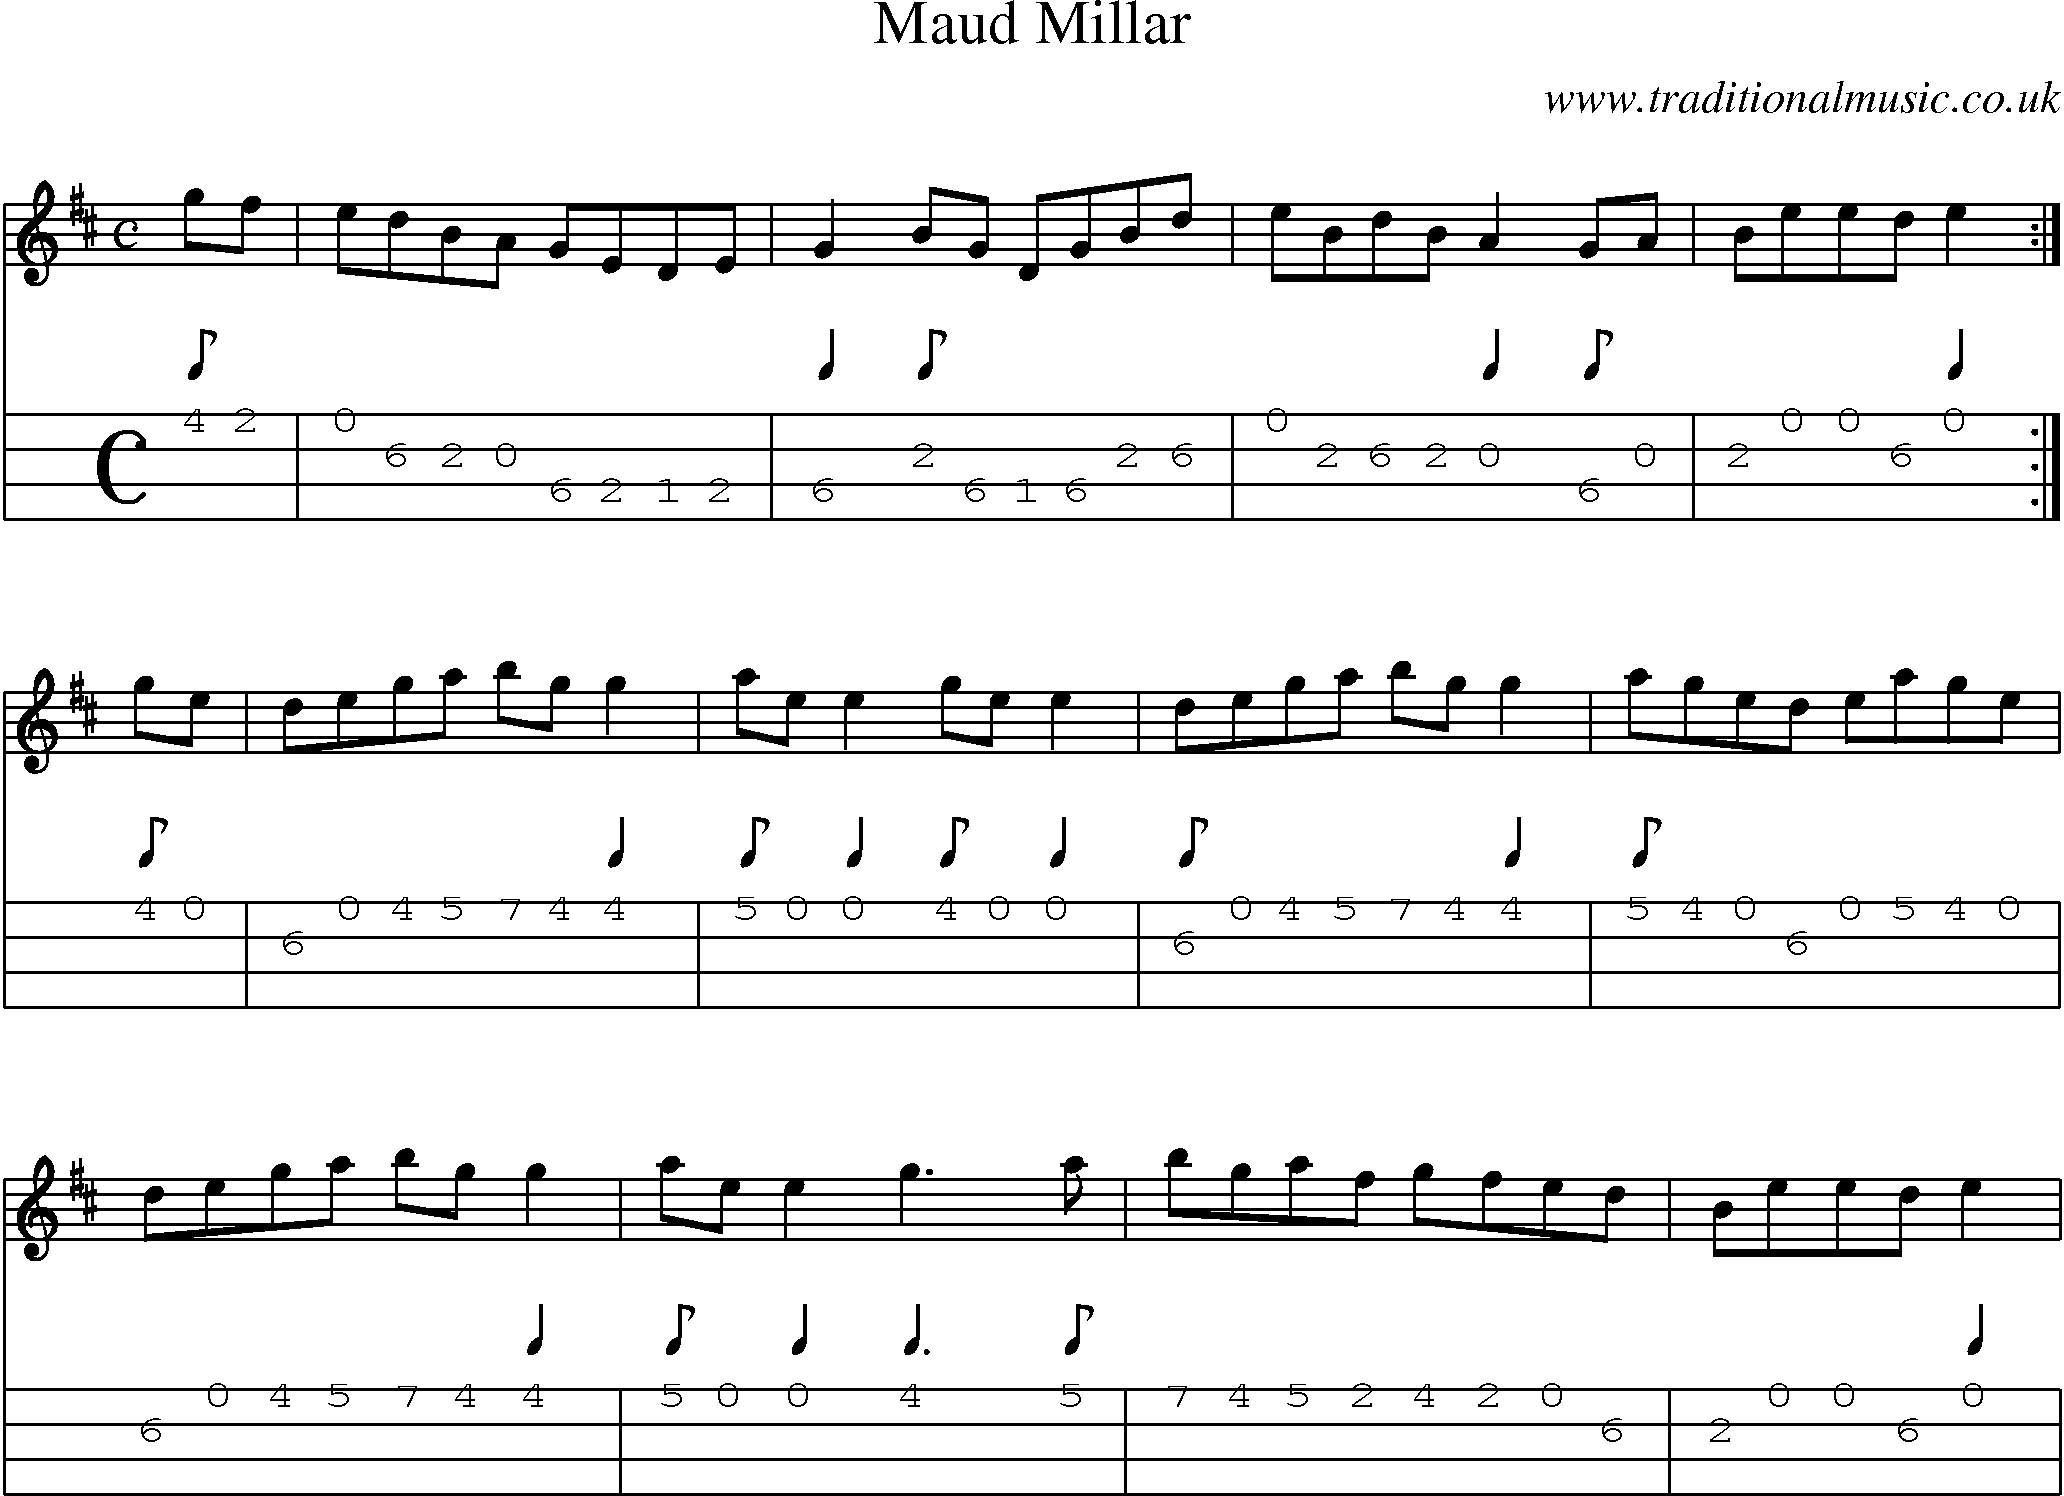 Music Score and Mandolin Tabs for Maud Millar